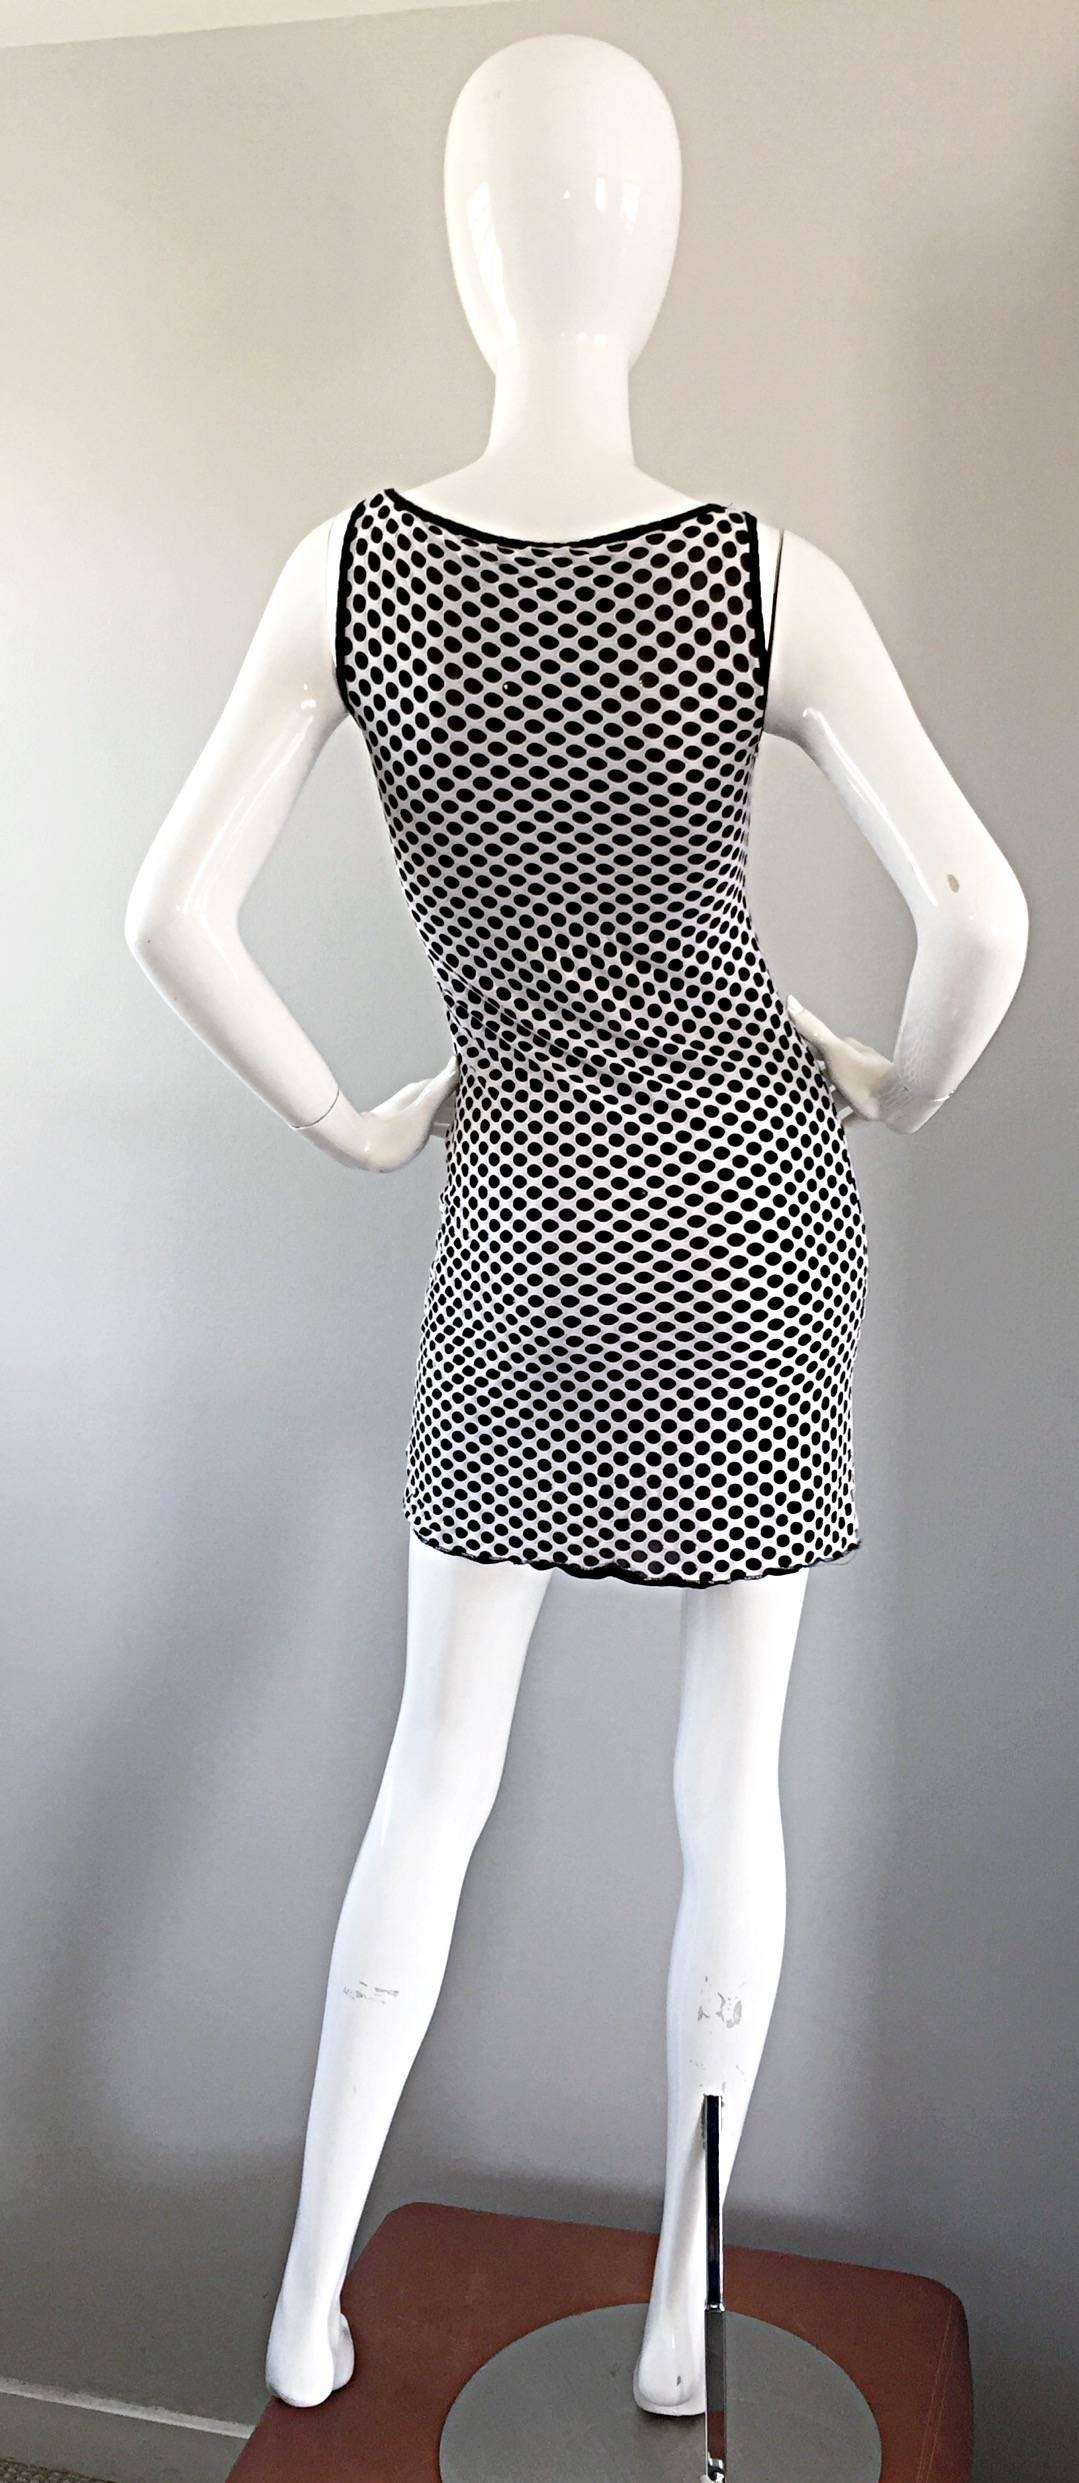 Women's 1990s Gianfranco Ferre Black and White Fishnet Beaded Bodycon 90s Vintage Dress For Sale